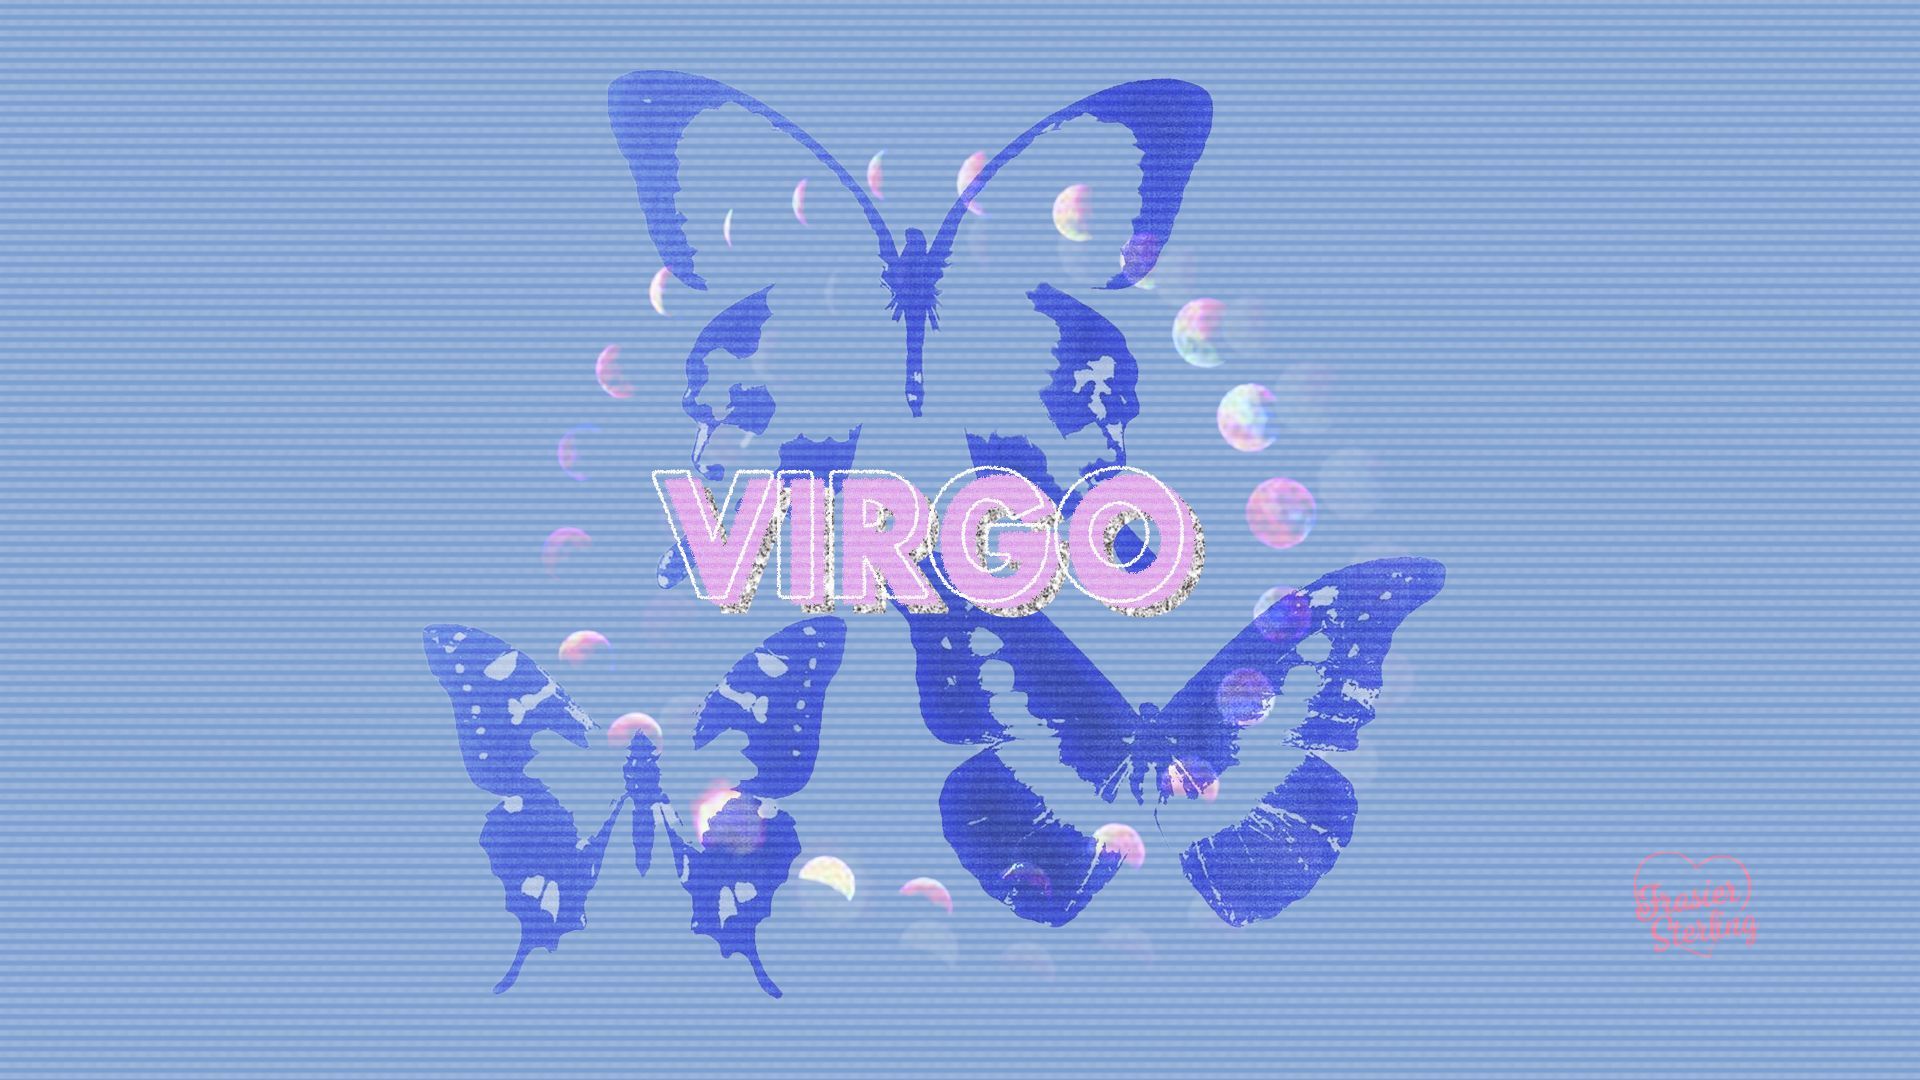 Virgo ✨. Glitch wallpaper, Macbook wallpaper, Laptop wallpaper